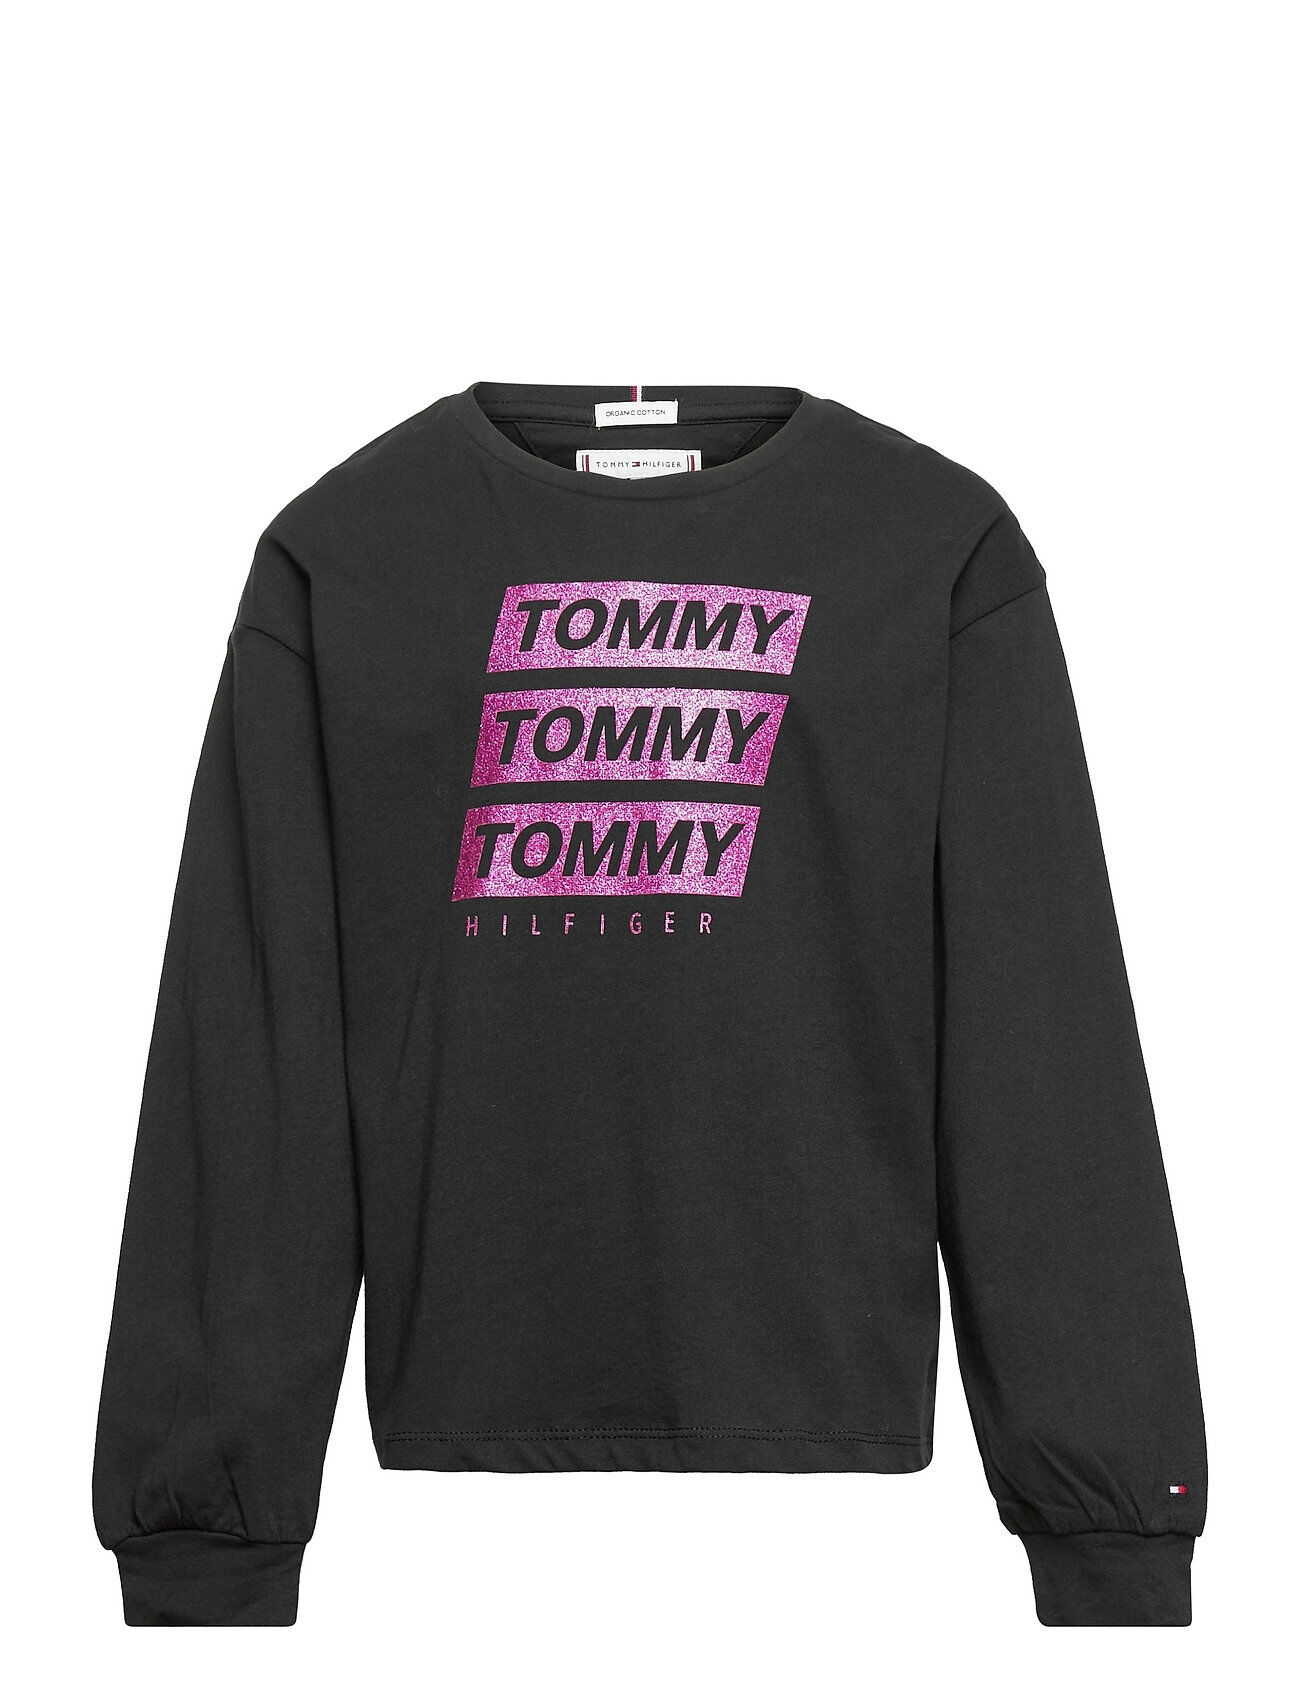 Tommy Hilfiger Graphic Print Tee L/S Sweat-shirt Genser Svart Tommy Hilfiger